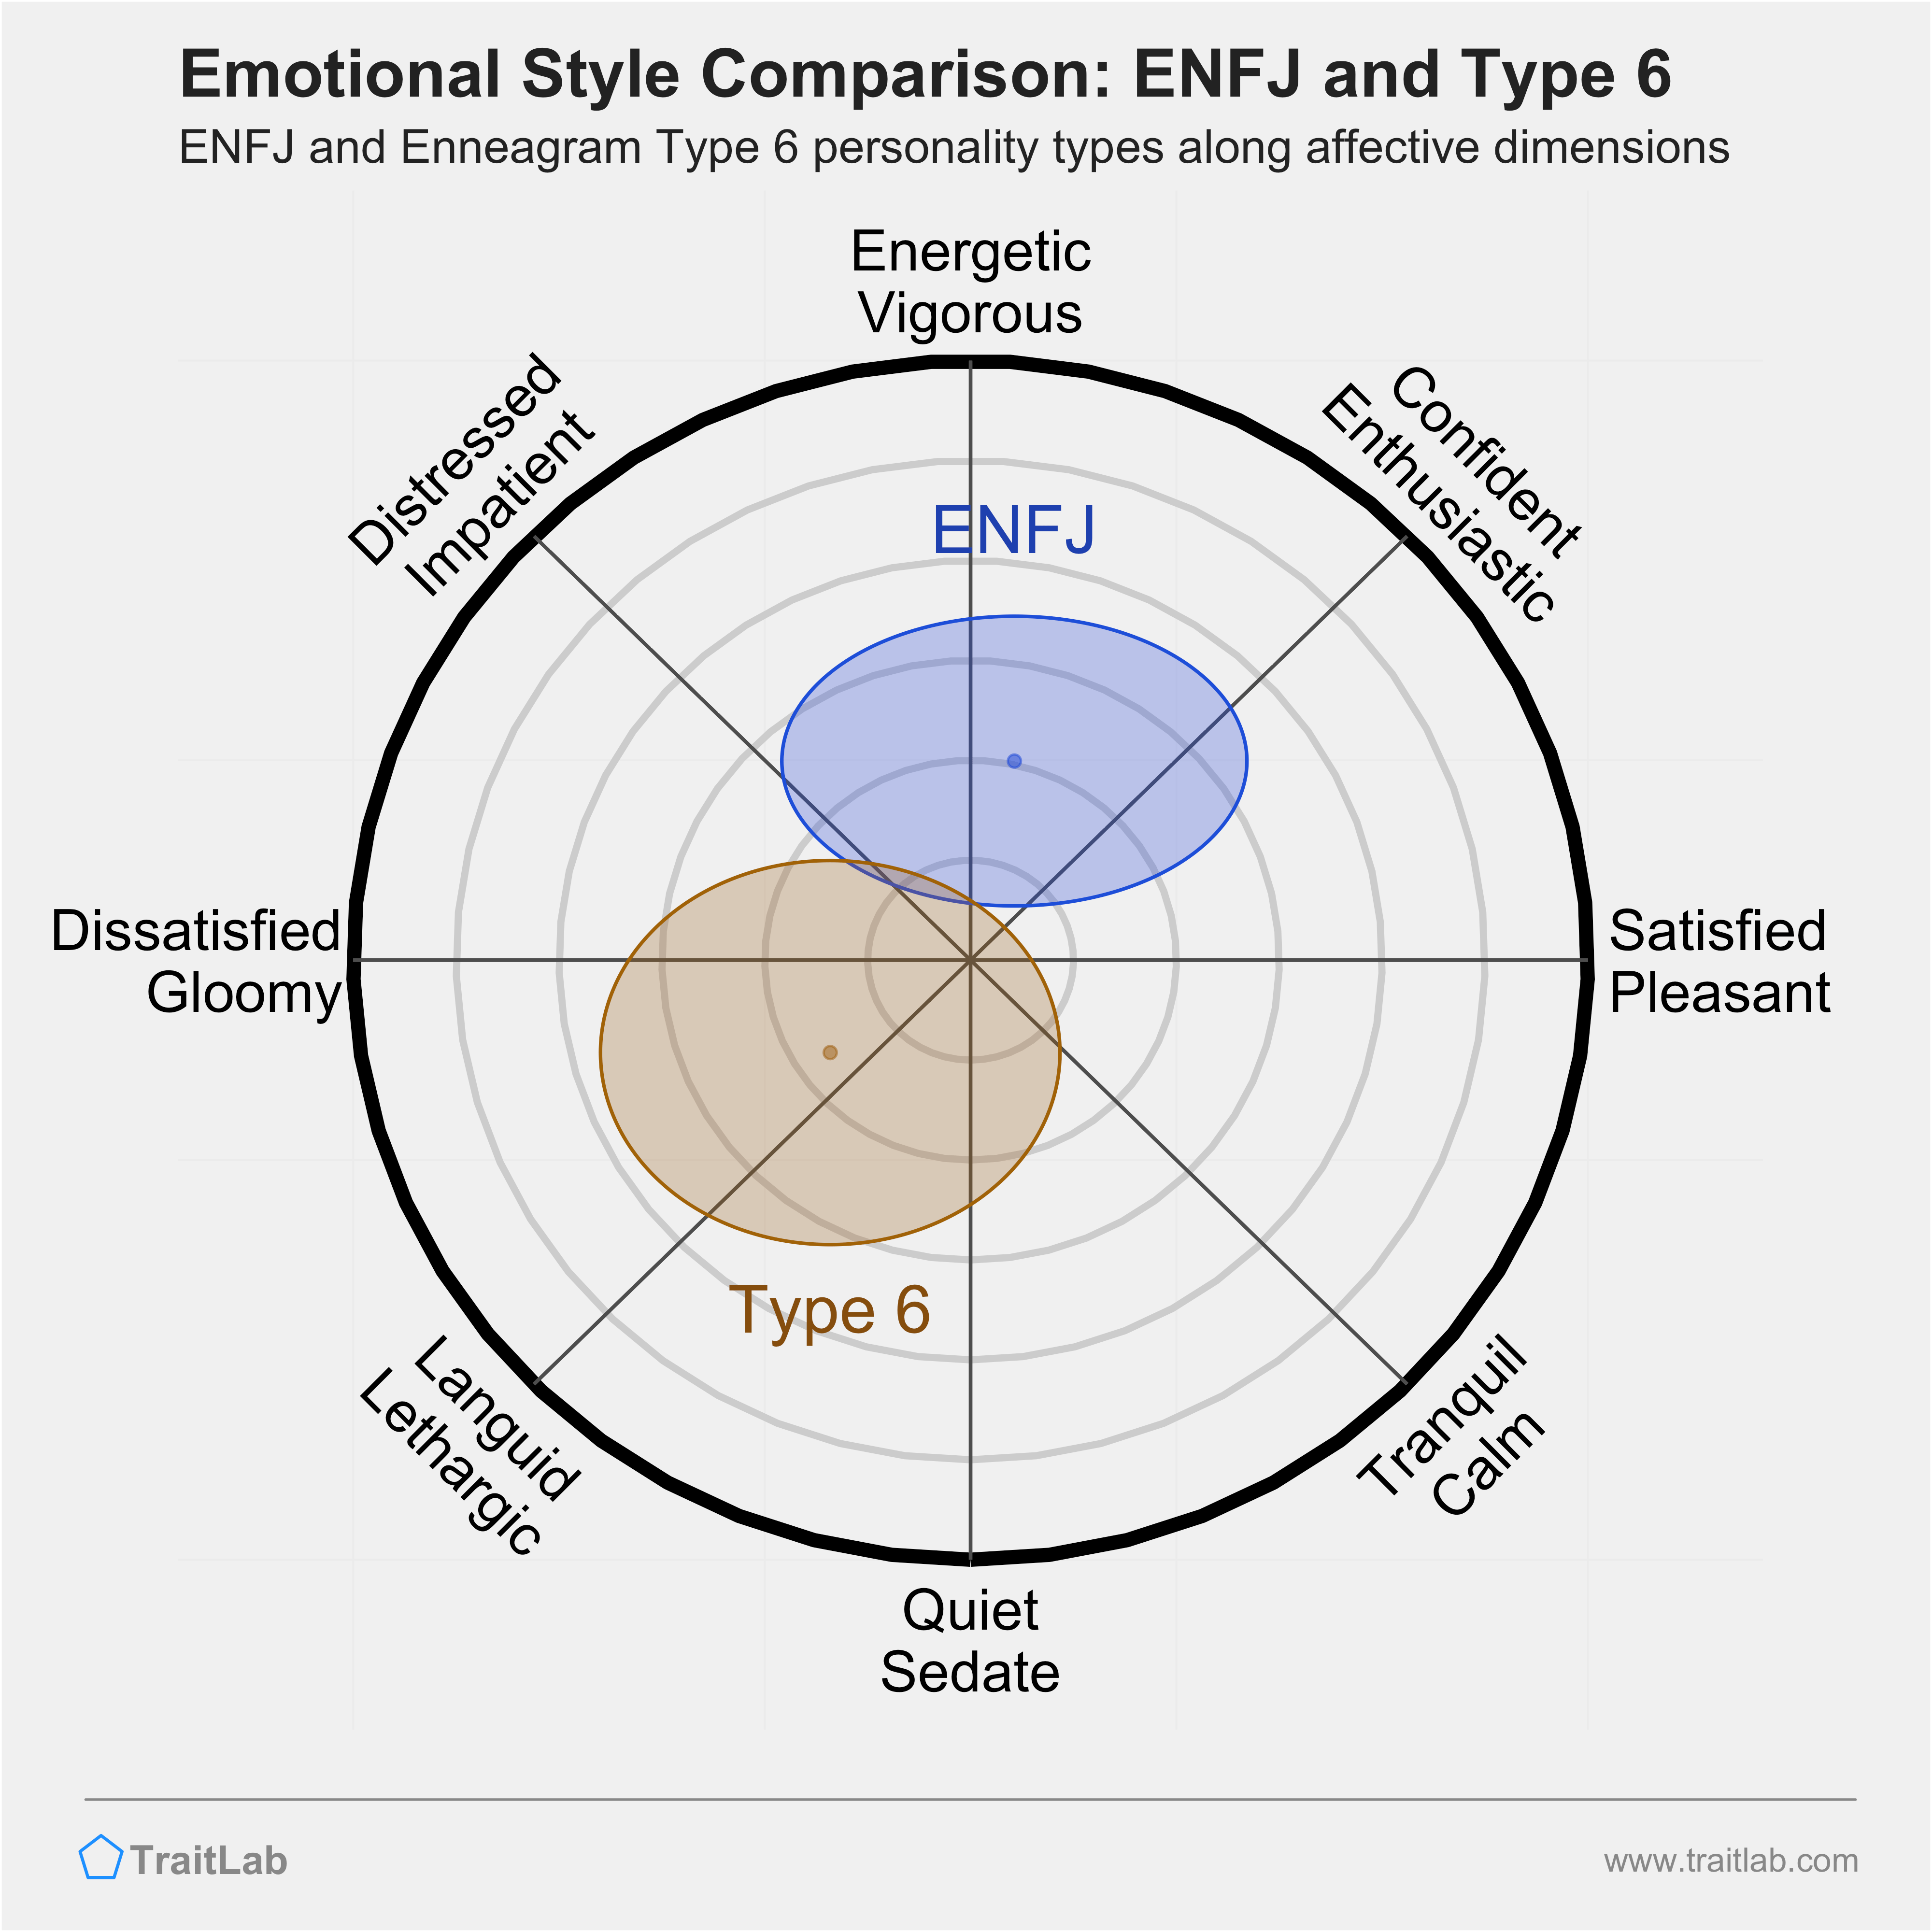 ENFJ and Type 6 comparison across emotional (affective) dimensions